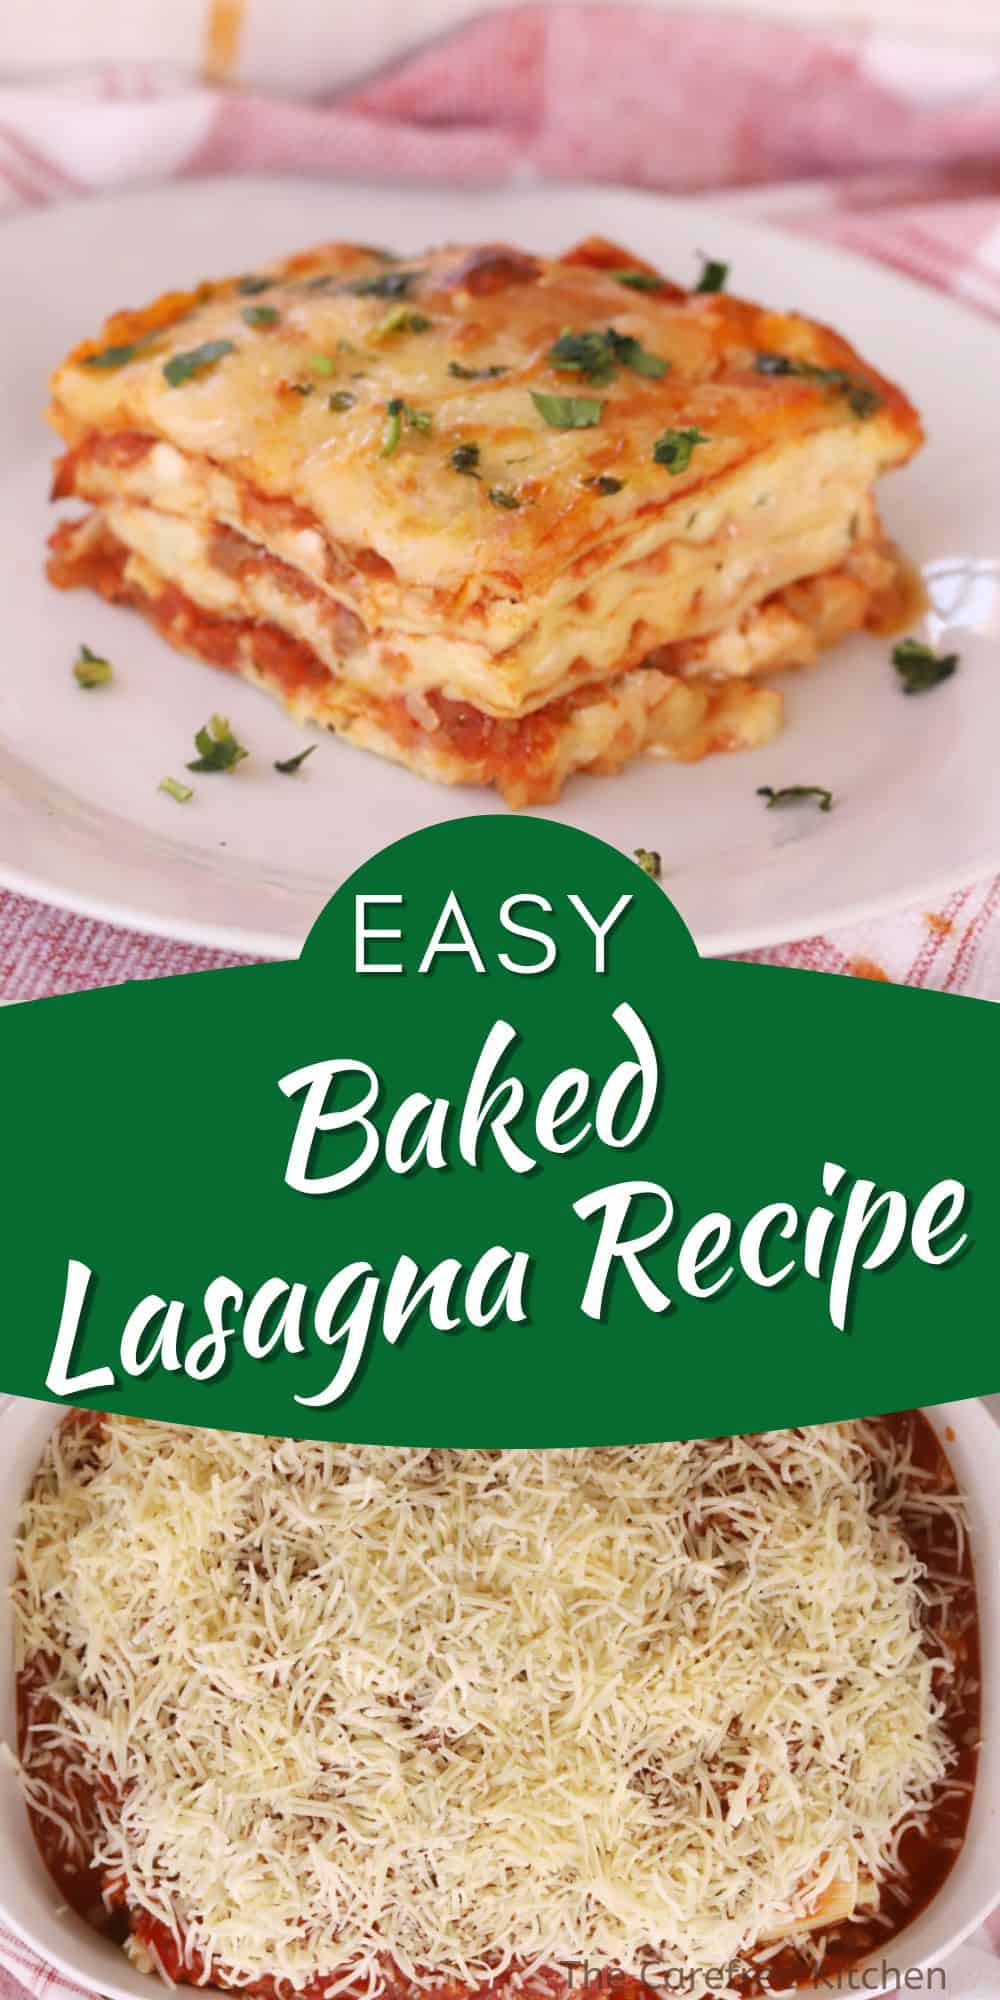 Homemade Lasagna Recipe - The Carefree Kitchen